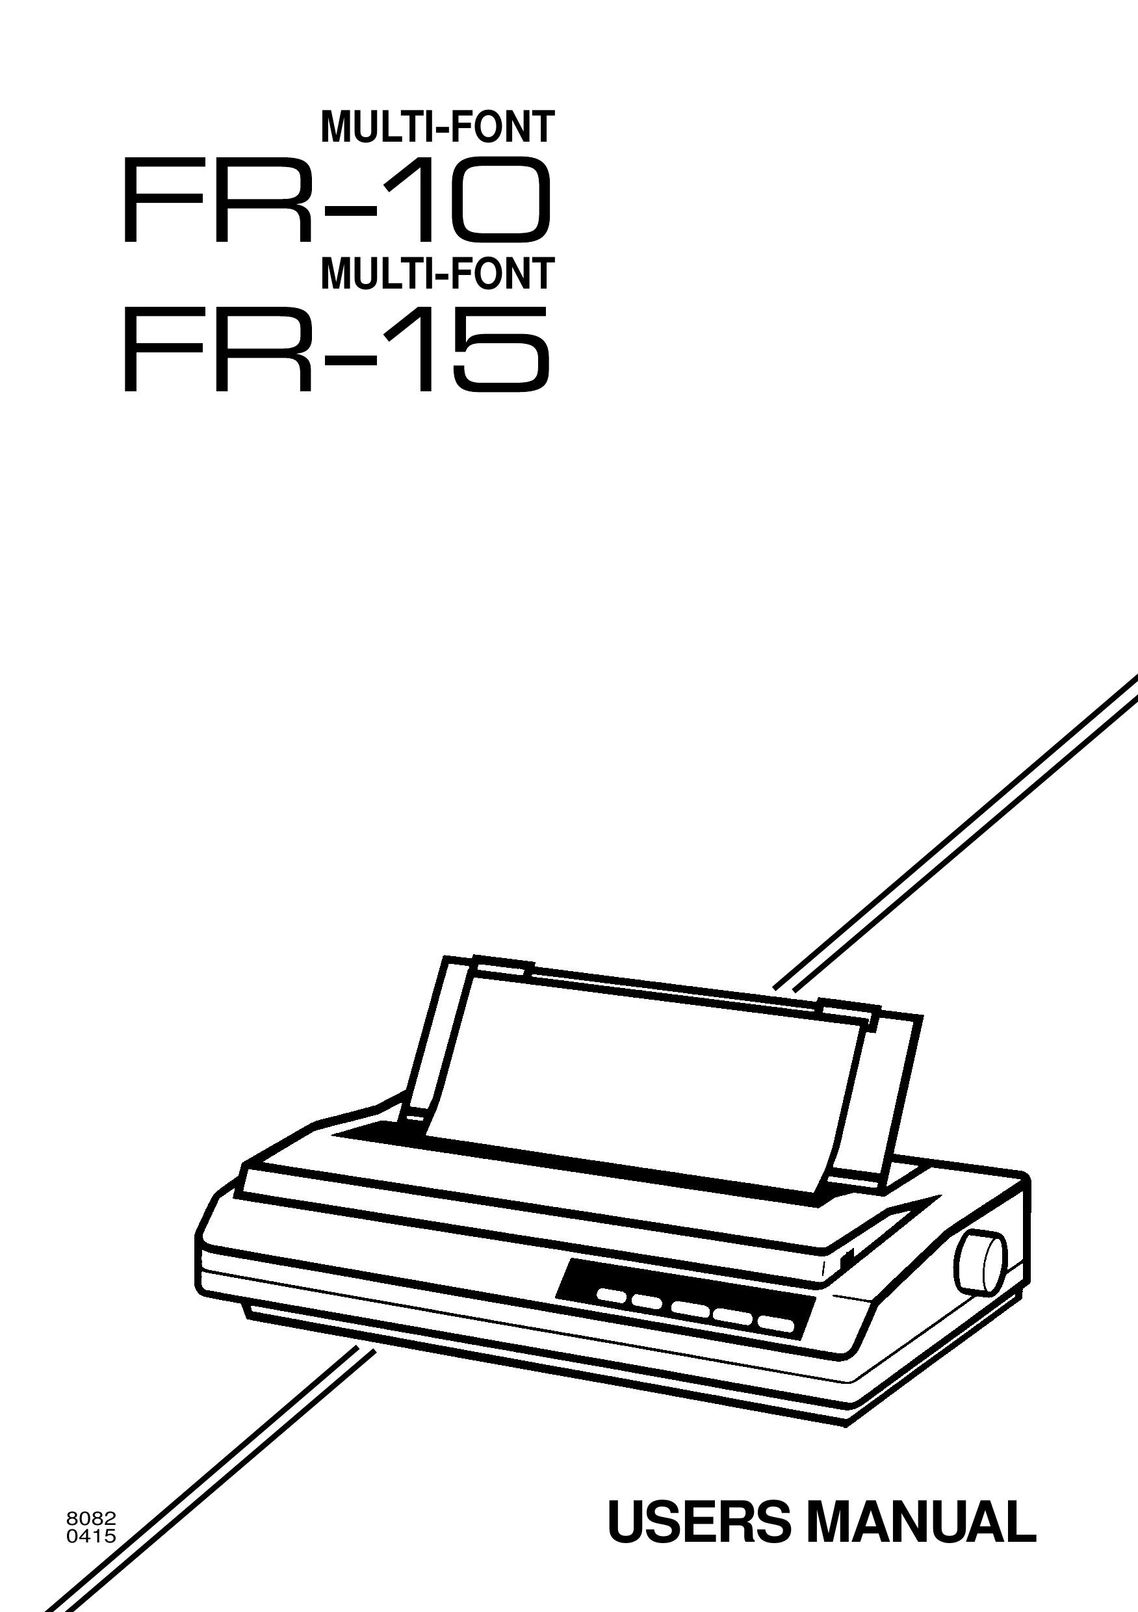 Star Micronics FR-15 Printer User Manual